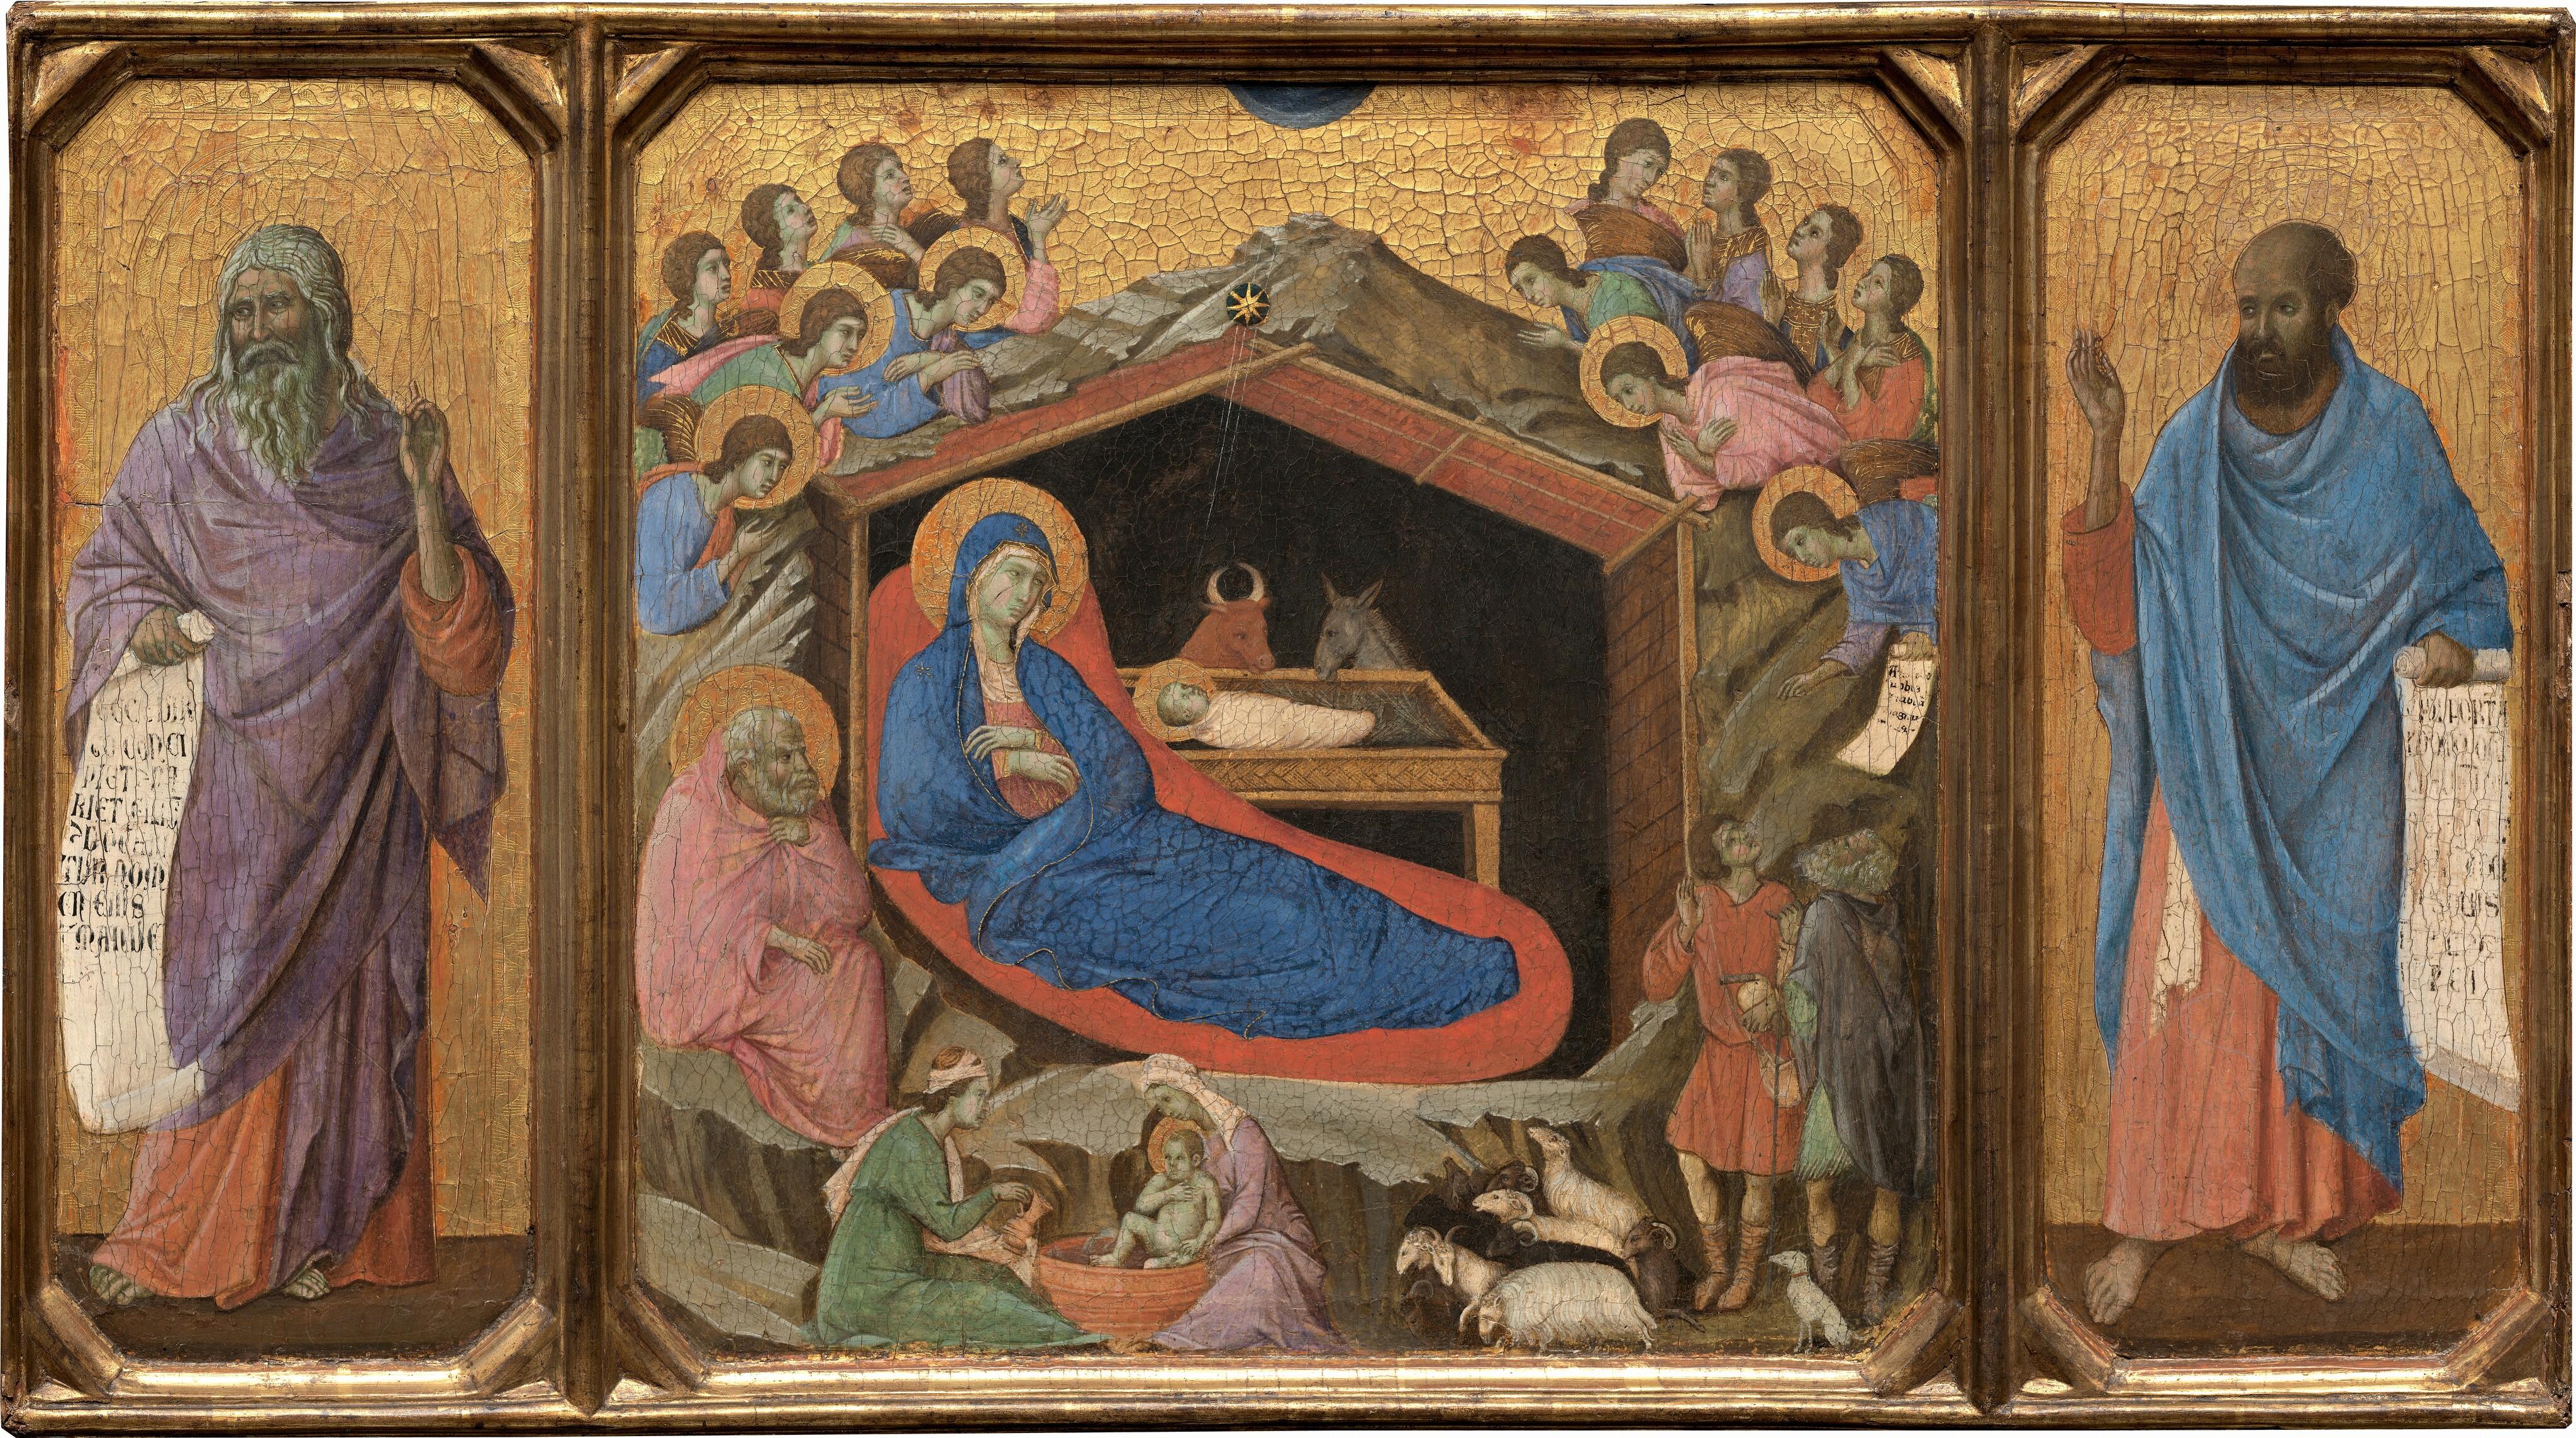 Duccio di Buoninsegna, Η Γέννηση και οι προφήτες Ησαΐας και Ιεζεκιήλ, National Gallery of Art, Washington.